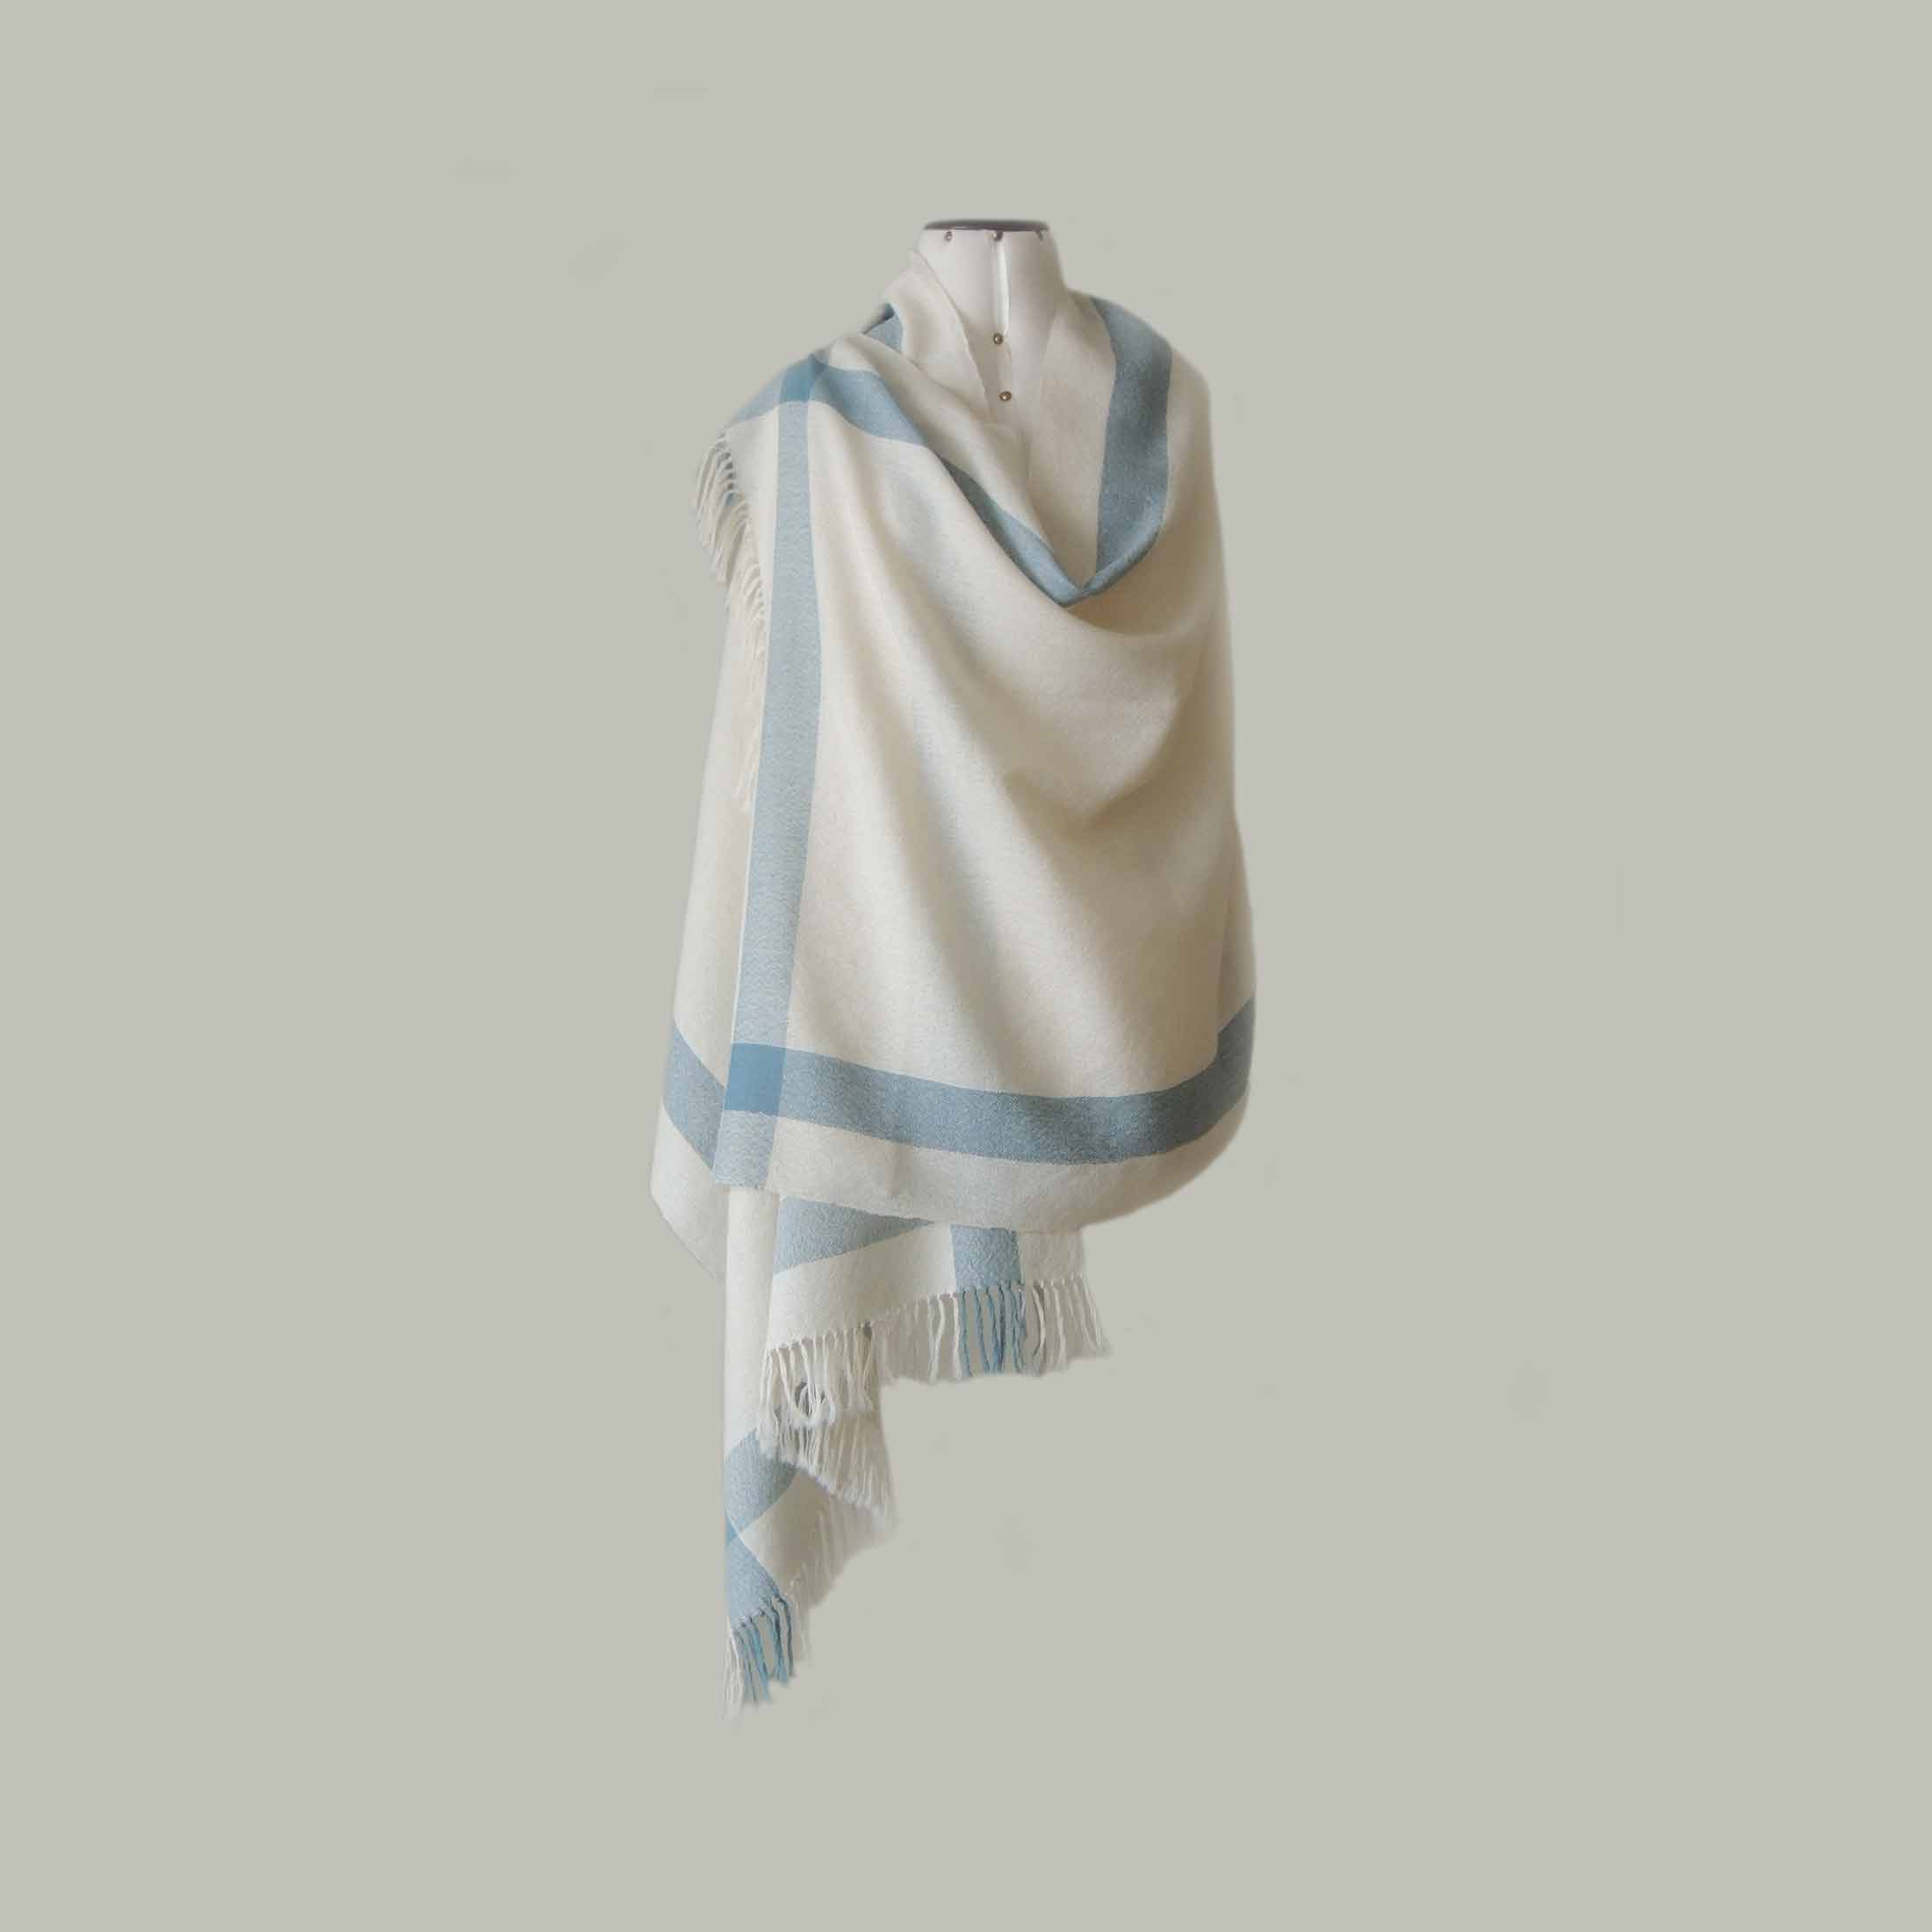 PopsFL knitwear Peru wholesale manufactor handwoven shawl - stole baby alpaca striped two colors